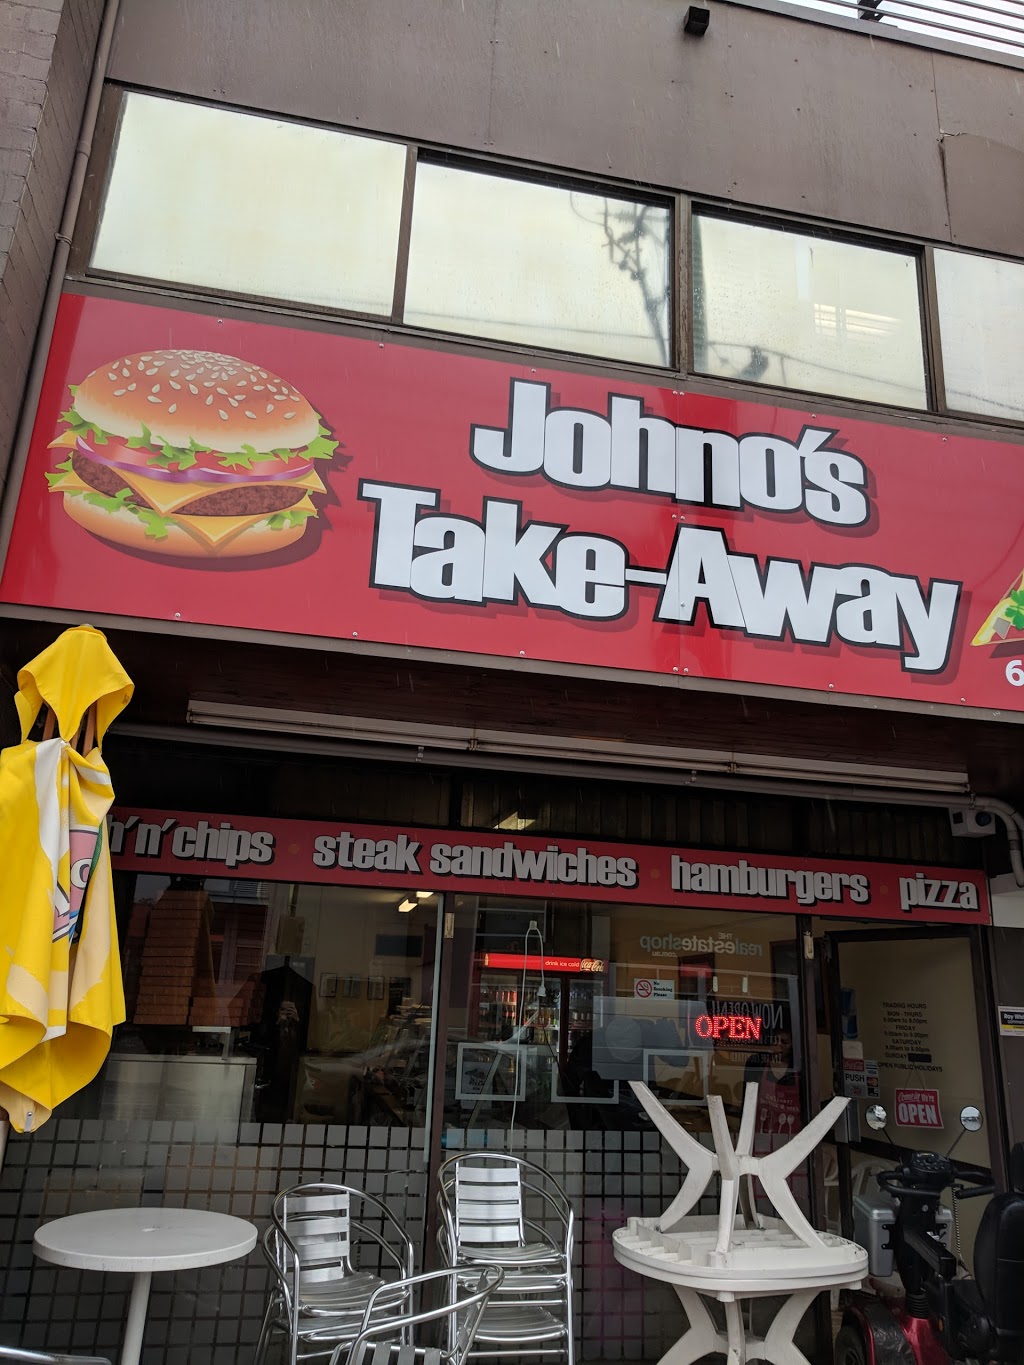 Johnos Takeaway And Pizza Bar | meal takeaway | 1/118 Mawson Pl, Mawson ACT 2607, Australia | 0262864448 OR +61 2 6286 4448